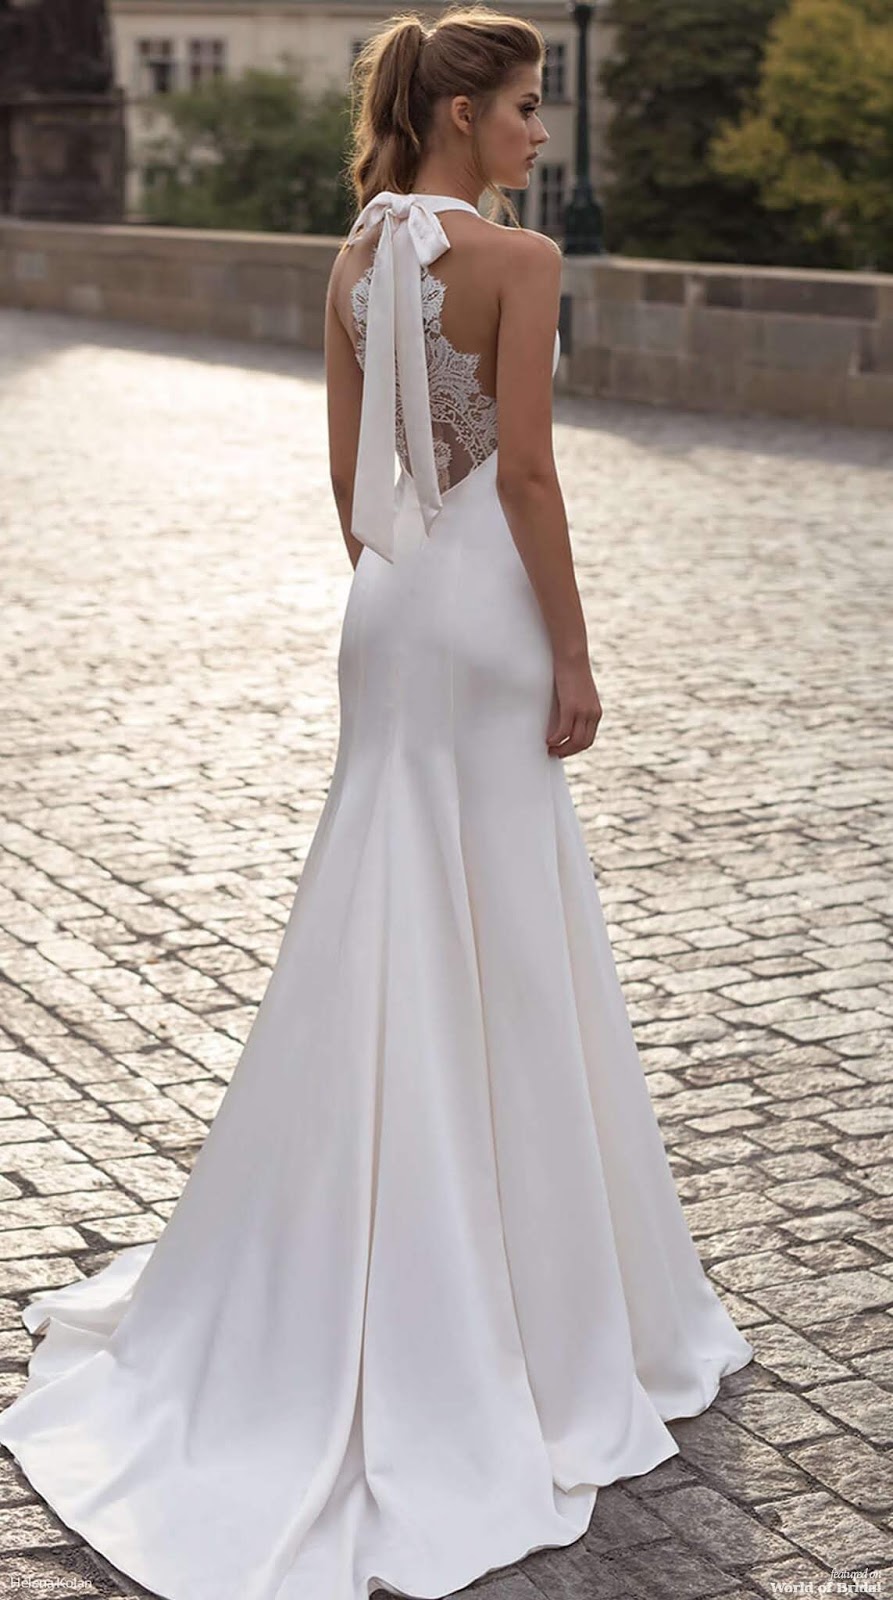  Helena  Kolan  2019  Wedding  Dresses  World of Bridal 